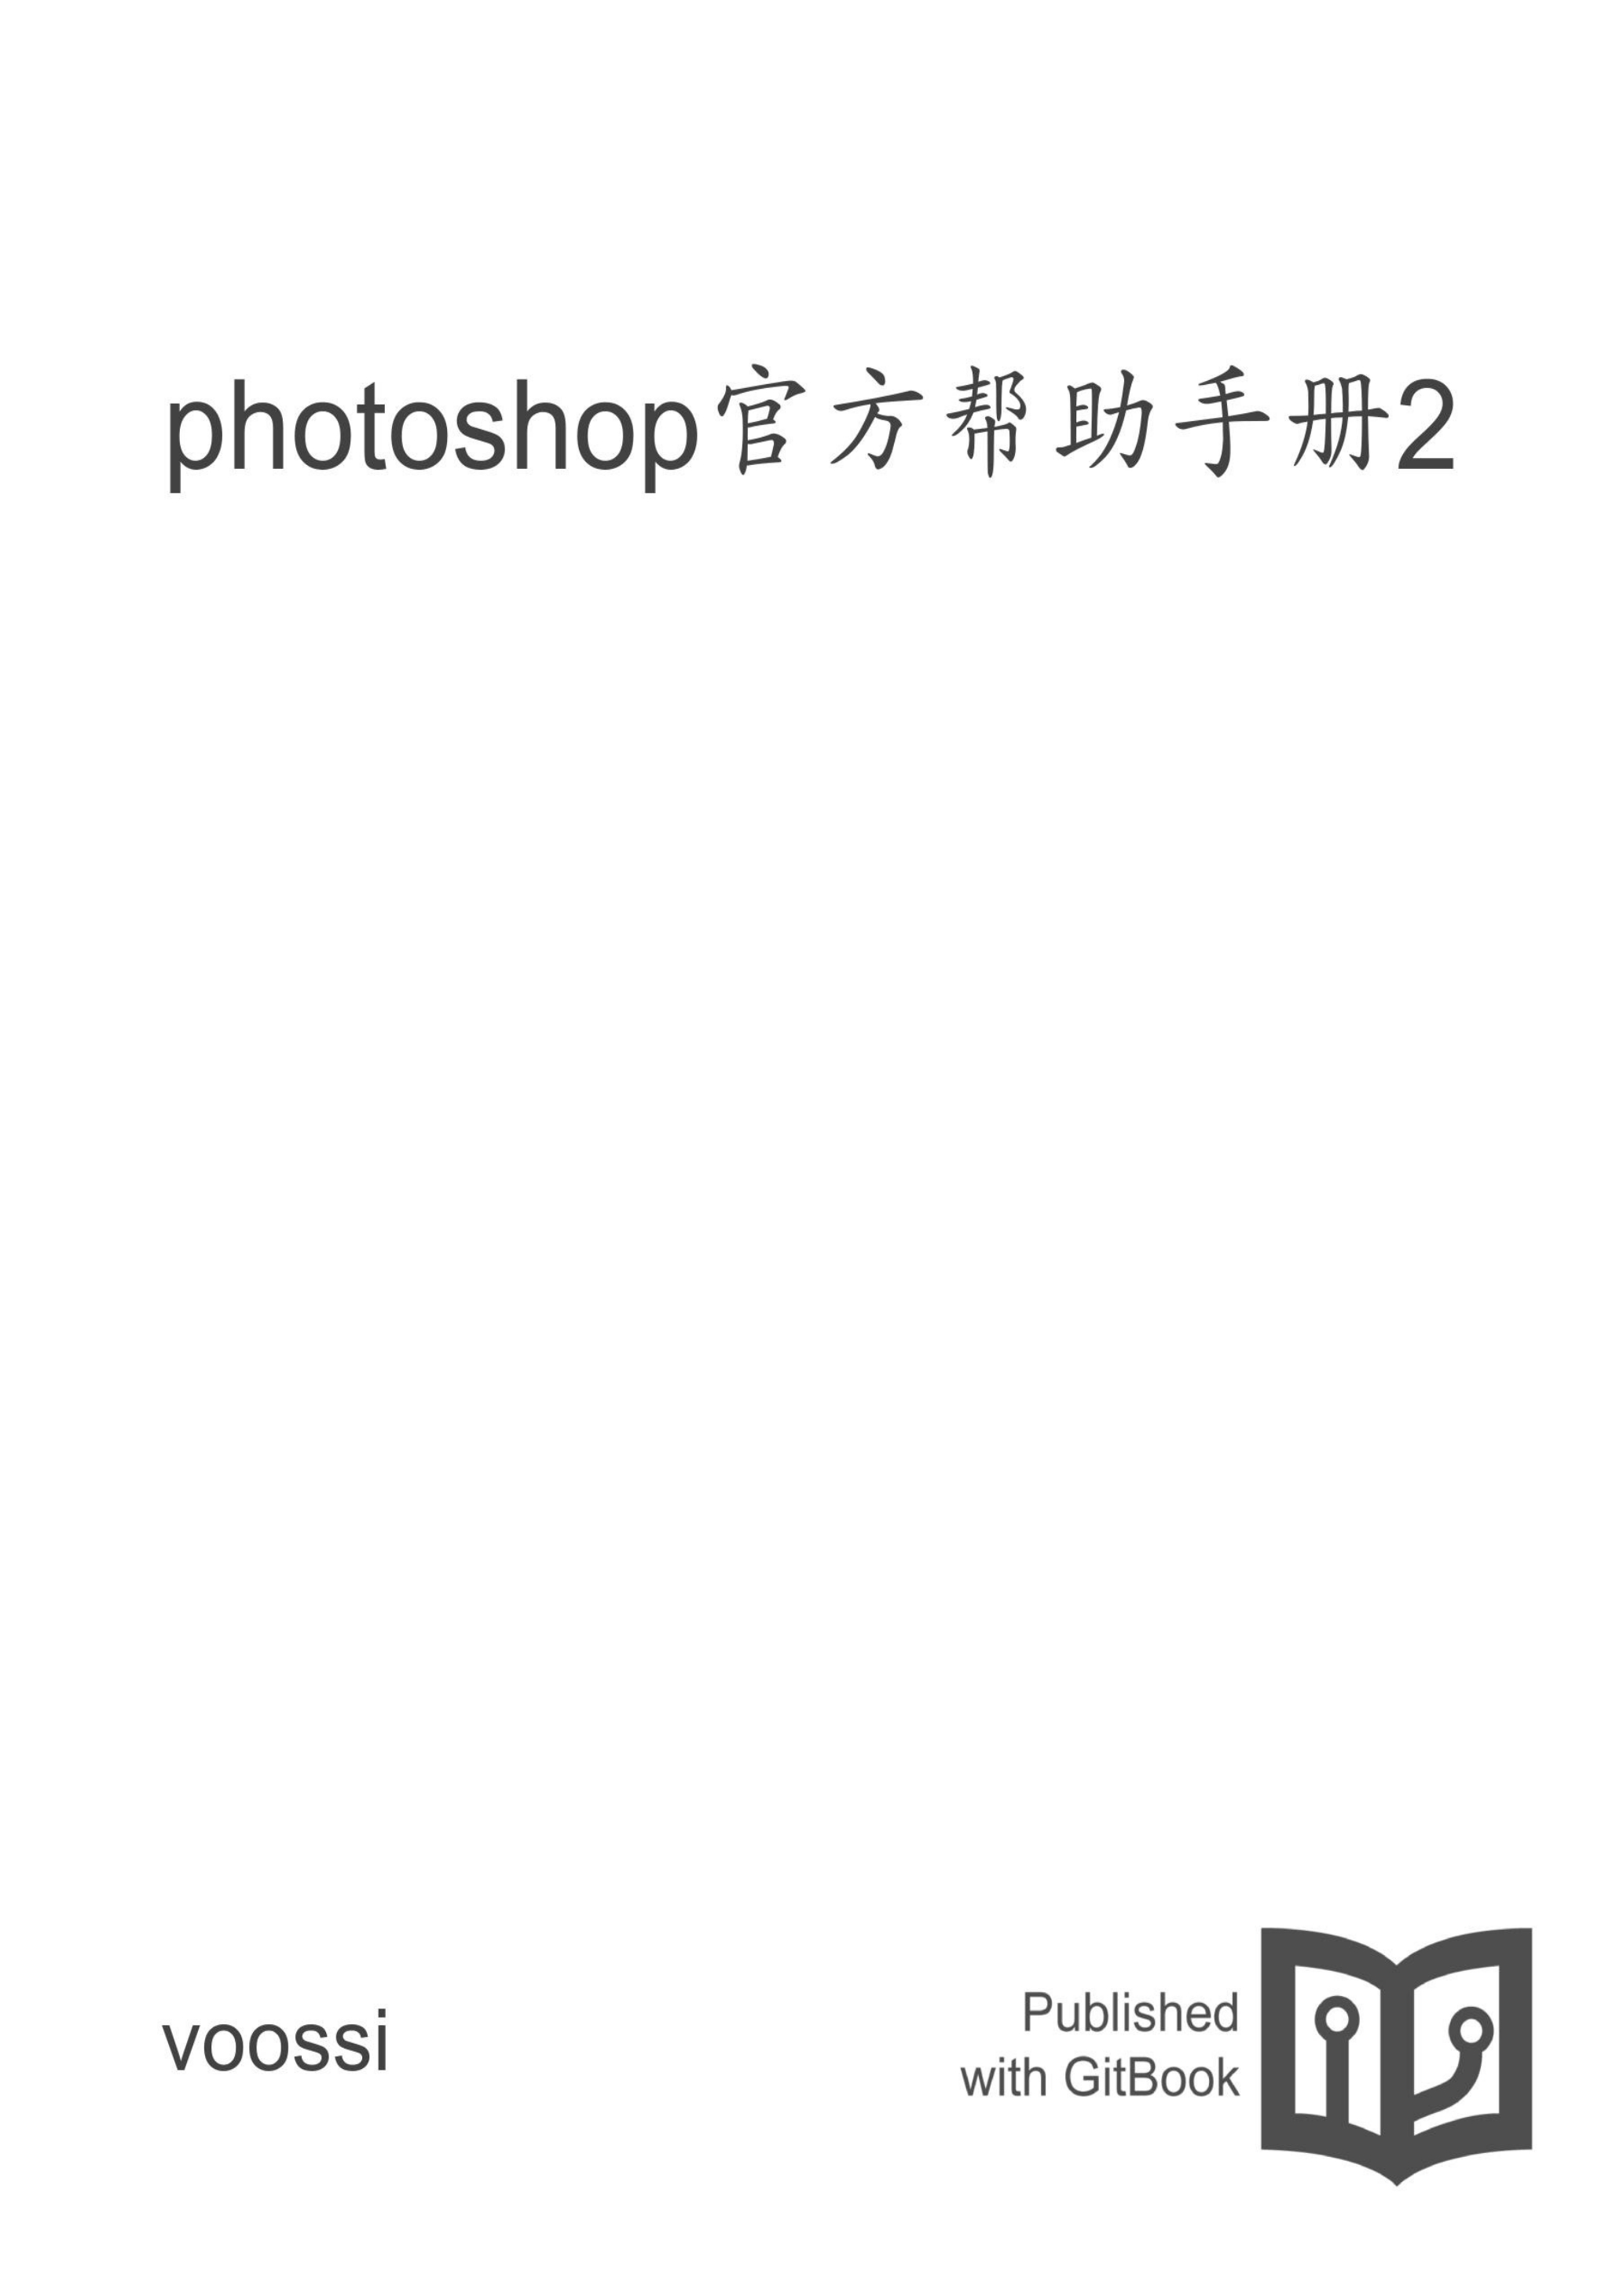 photoshop官方帮助手册2 封面